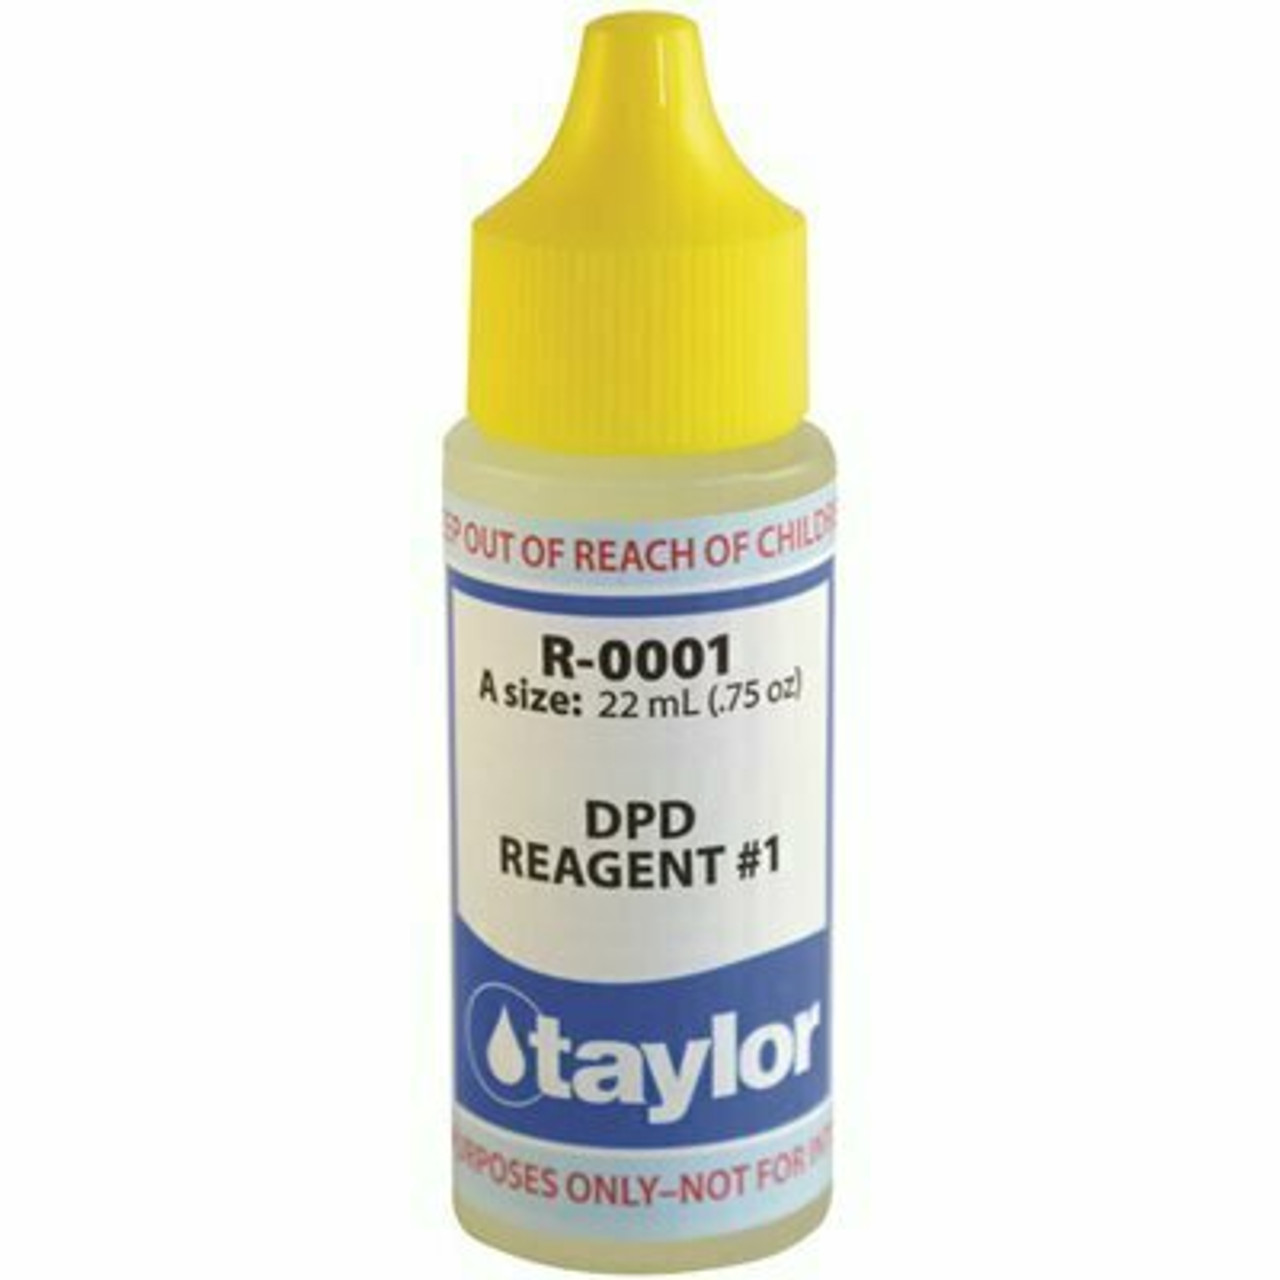 Taylor 0.75 Oz. Bottle Test Kit Replacement Reagent Refill Bottles Dpd Reagent #1